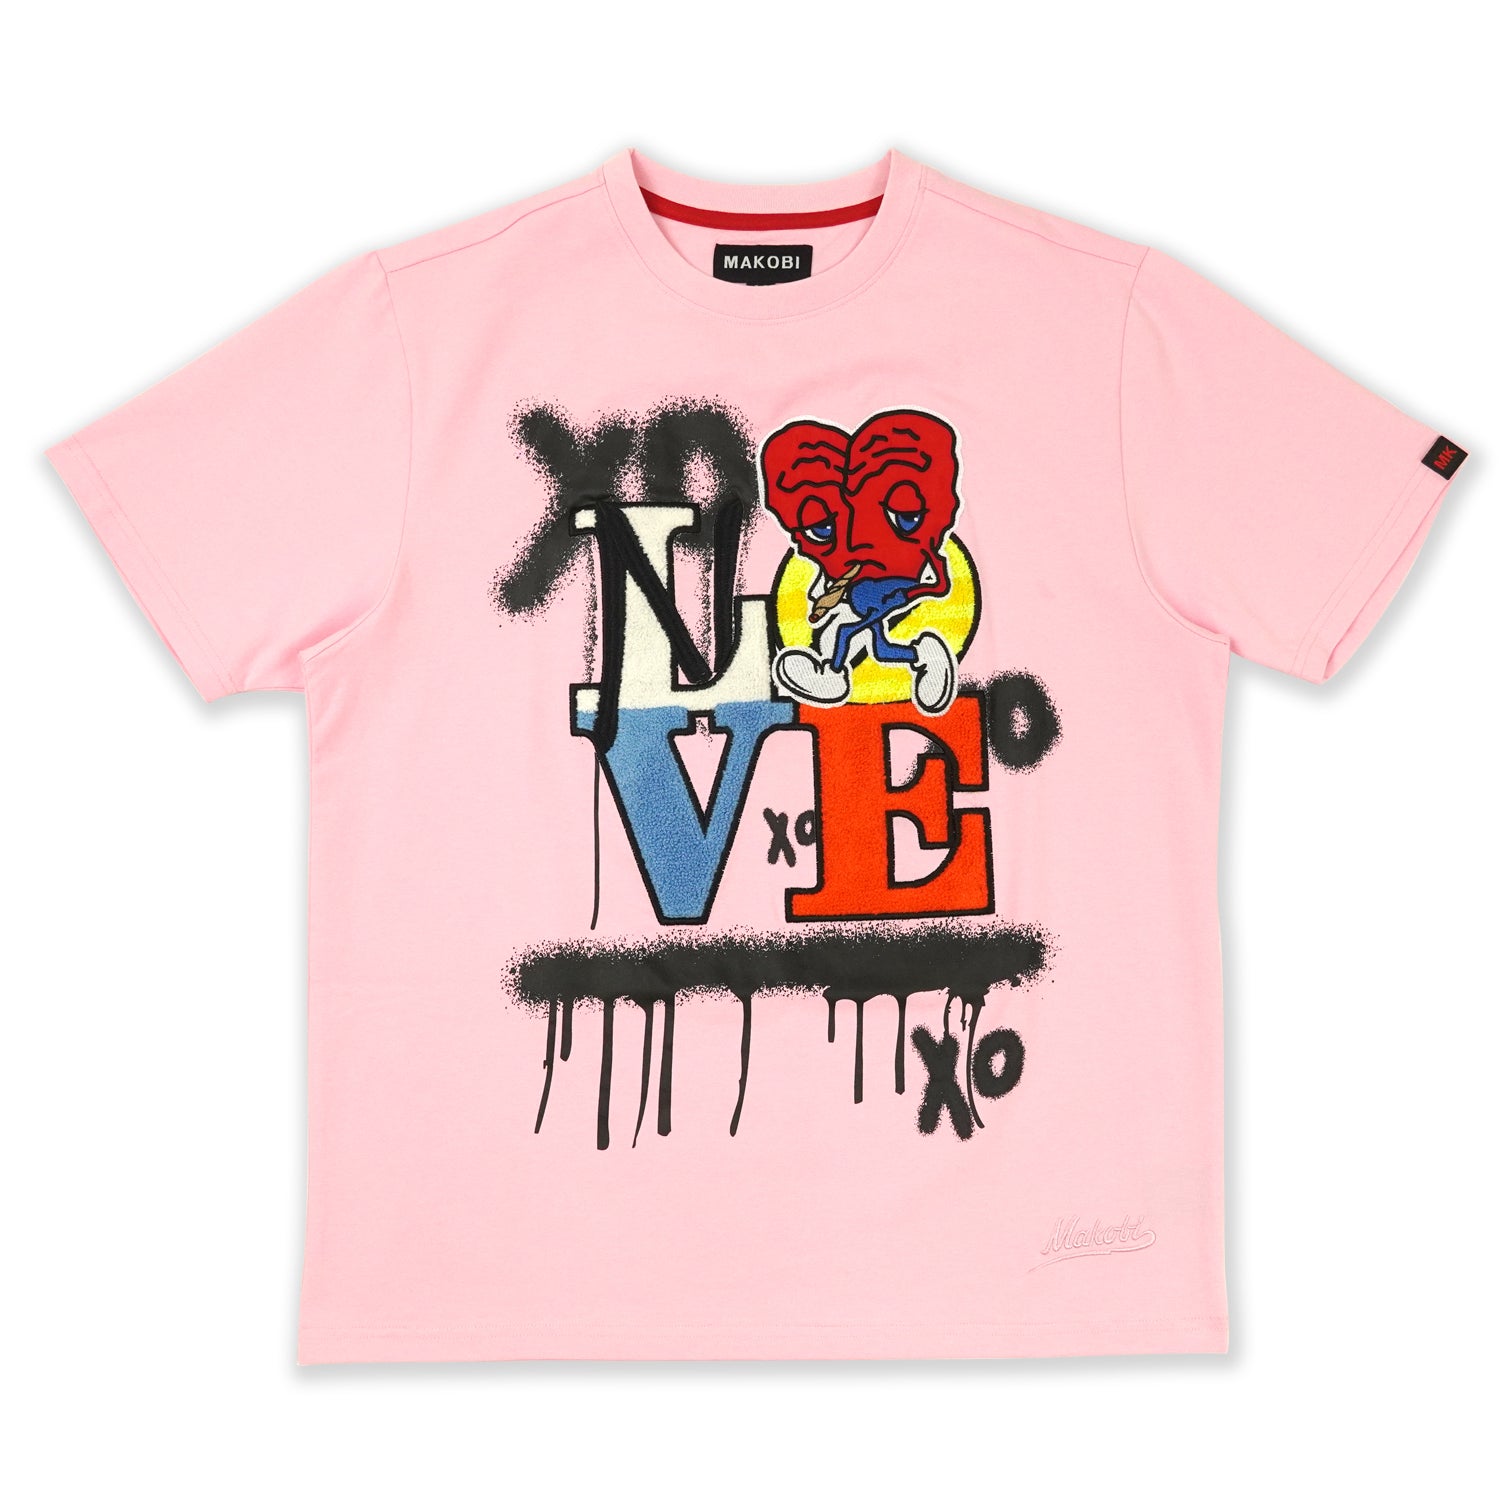 M203 Ko si Love Tee - Pink